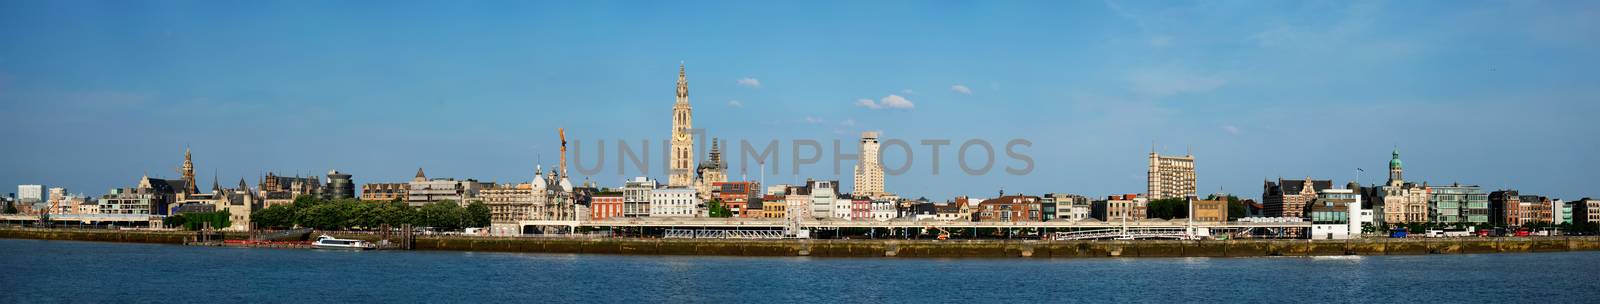 Antwerp view, Belgium by dimol